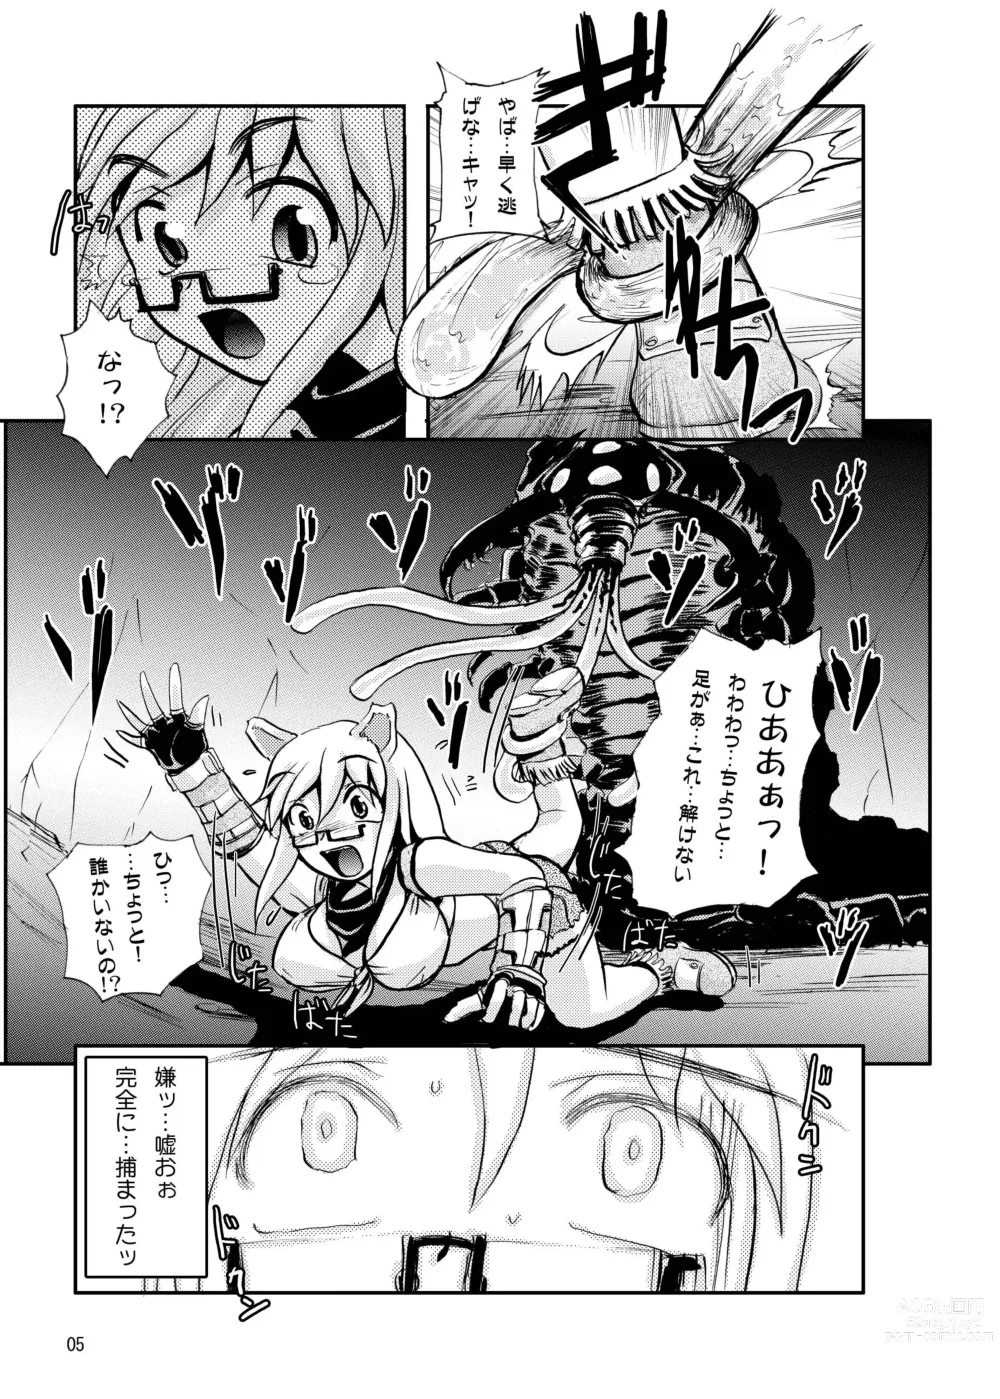 Page 7 of doujinshi Deep Strike